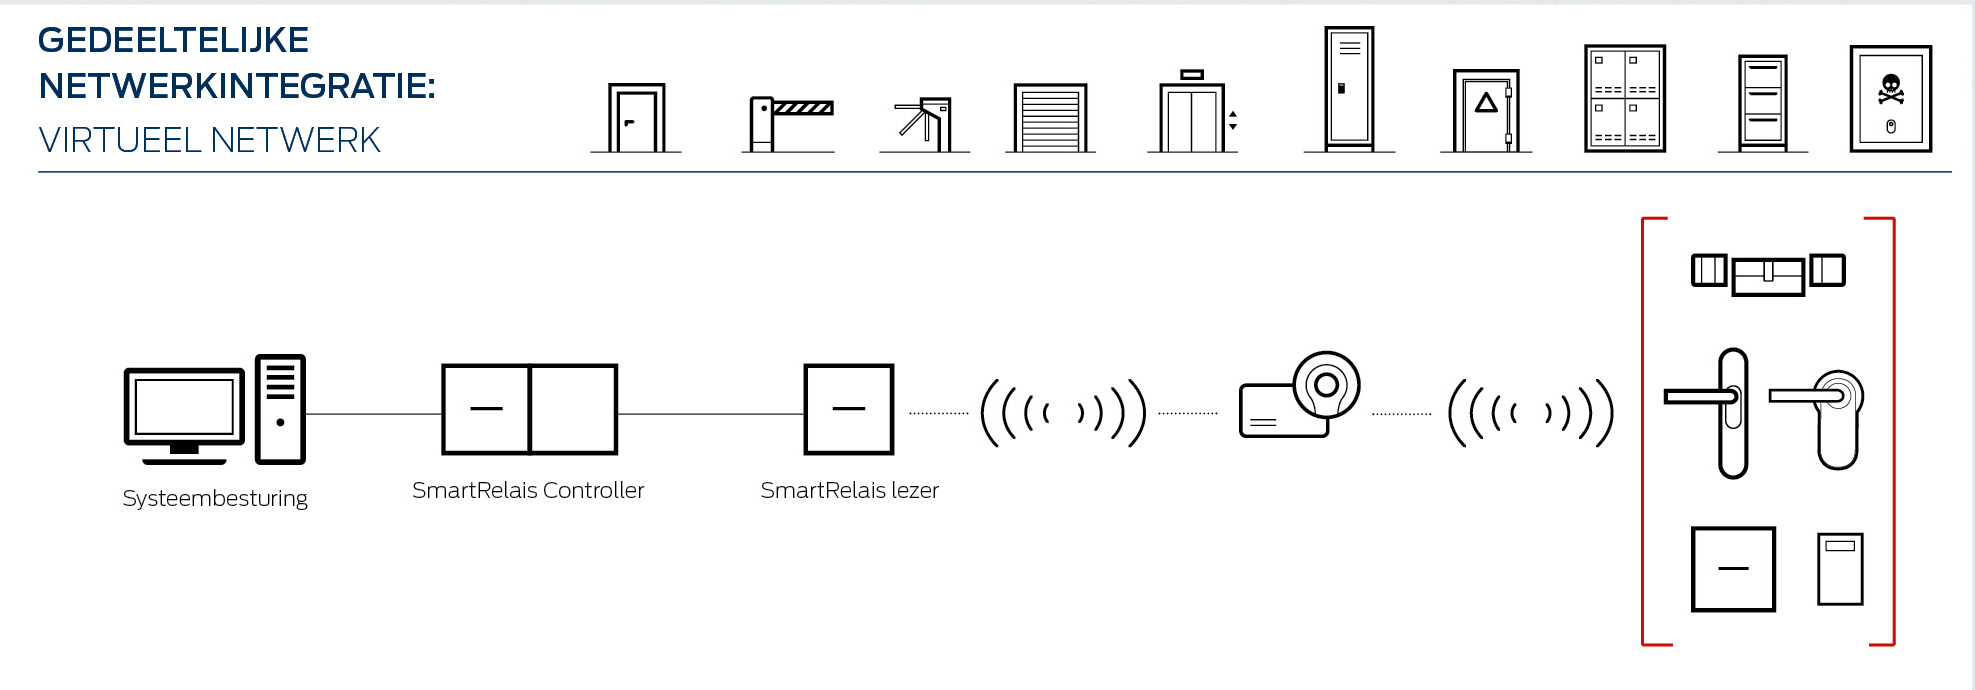 SimonsVoss Technologies - elektronische toegangscontrole - digitaal sluitsysteem - keyless security - access control - toegangscontrolesysteem